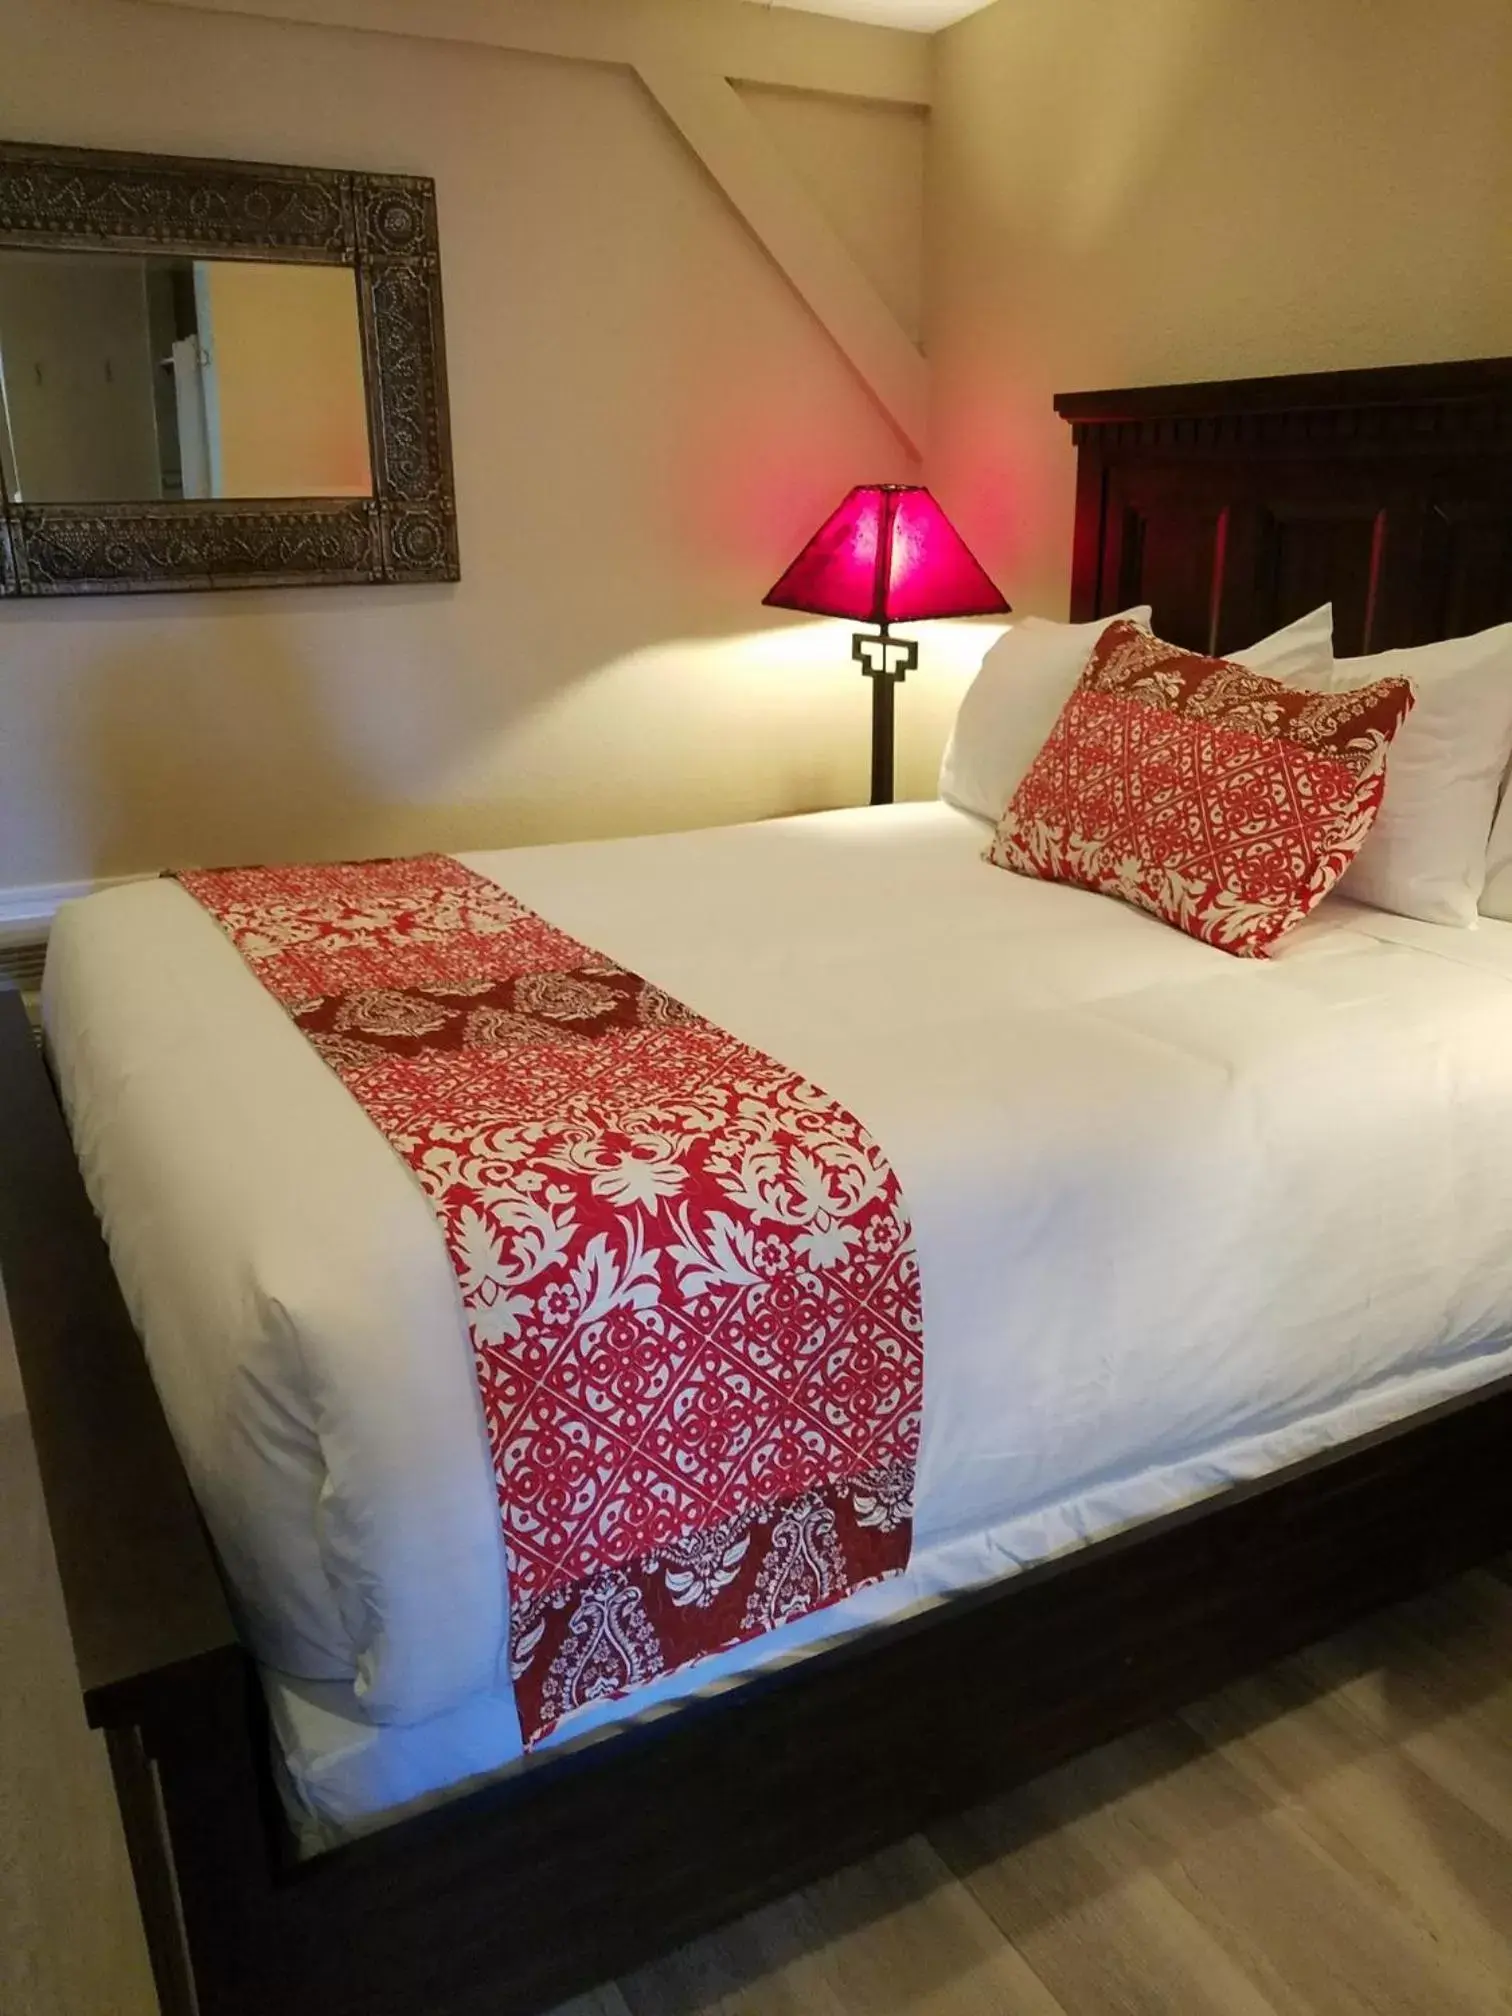 Bed in Lantern Light Inn - Romantic Getaway